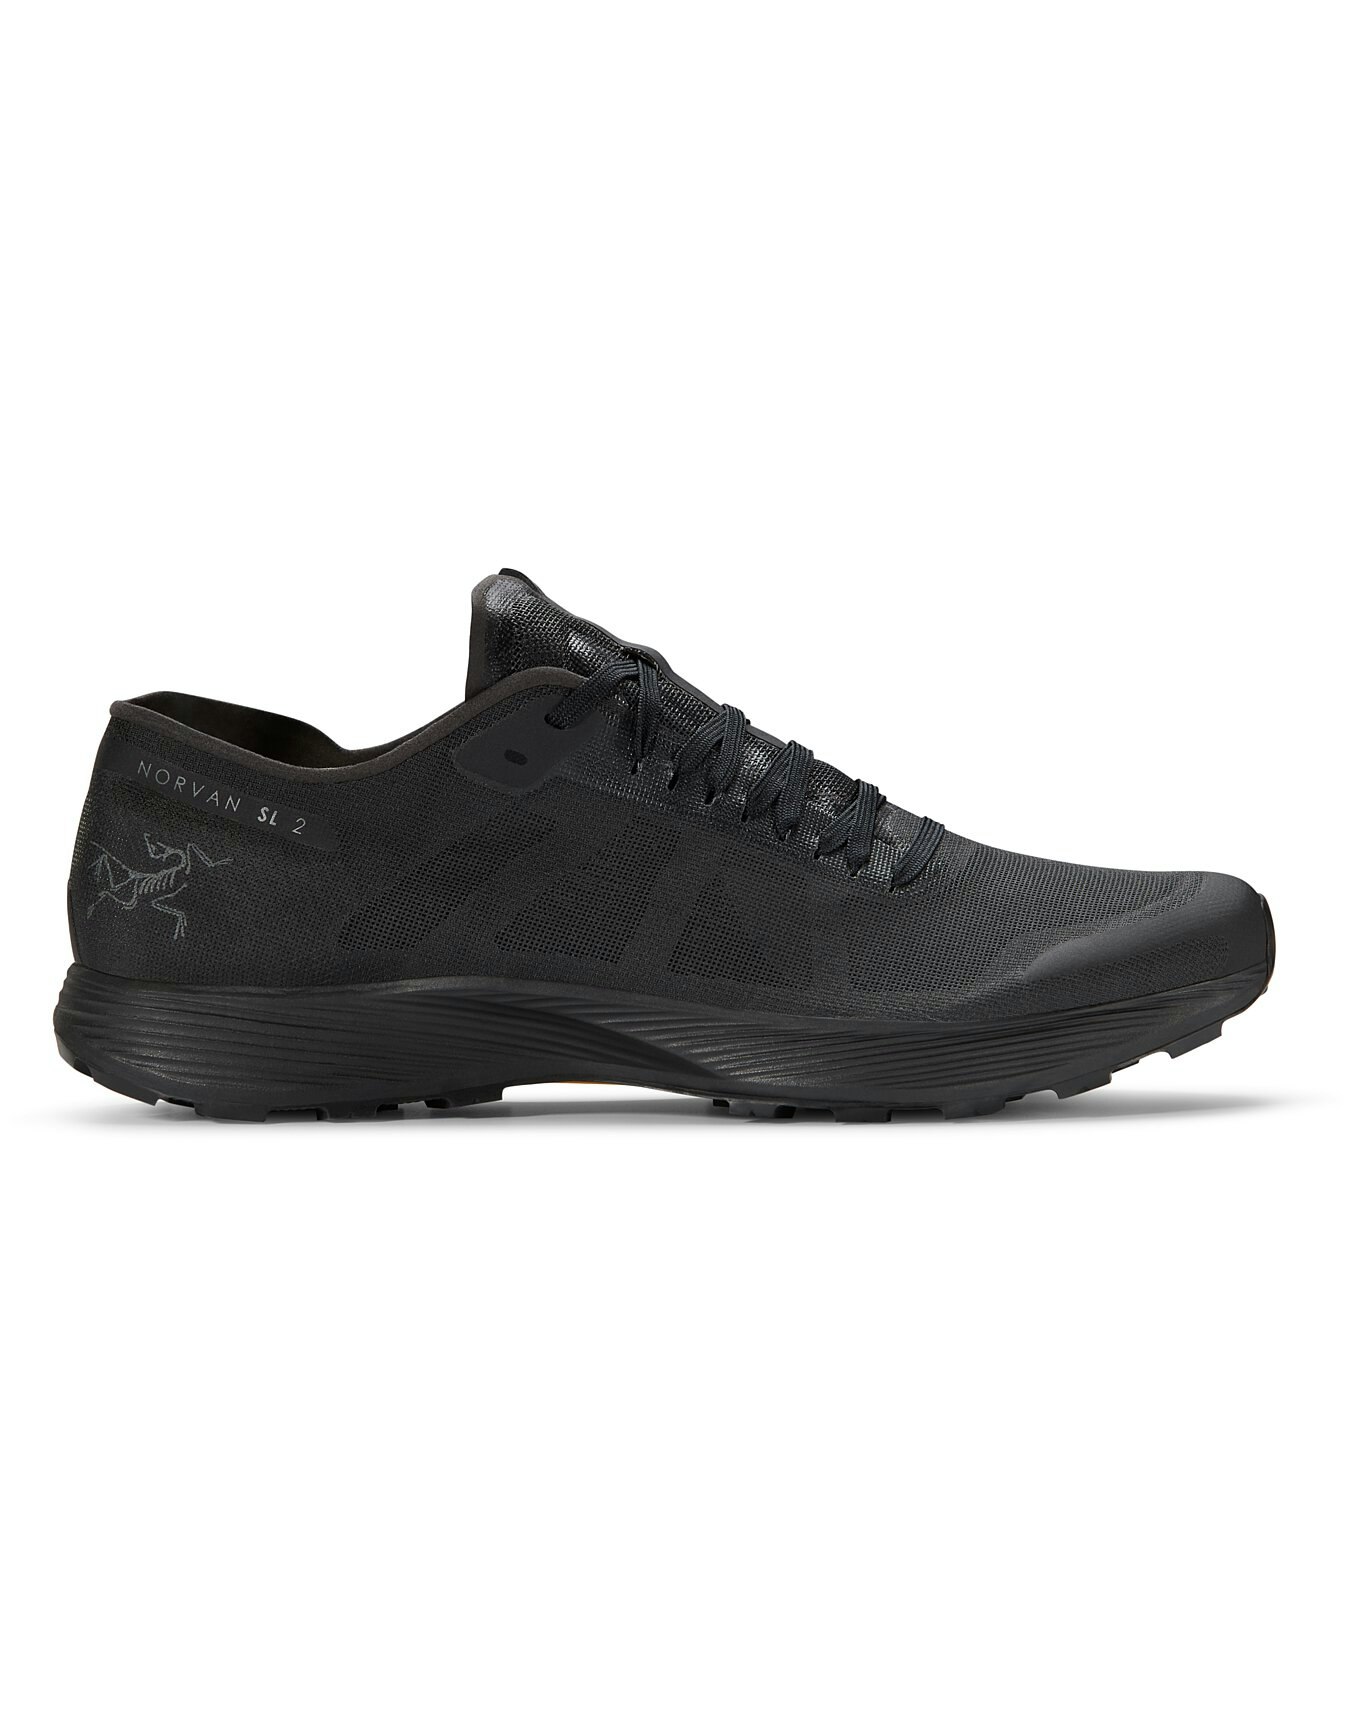 Norvan SL 2 Shoe Black/Black